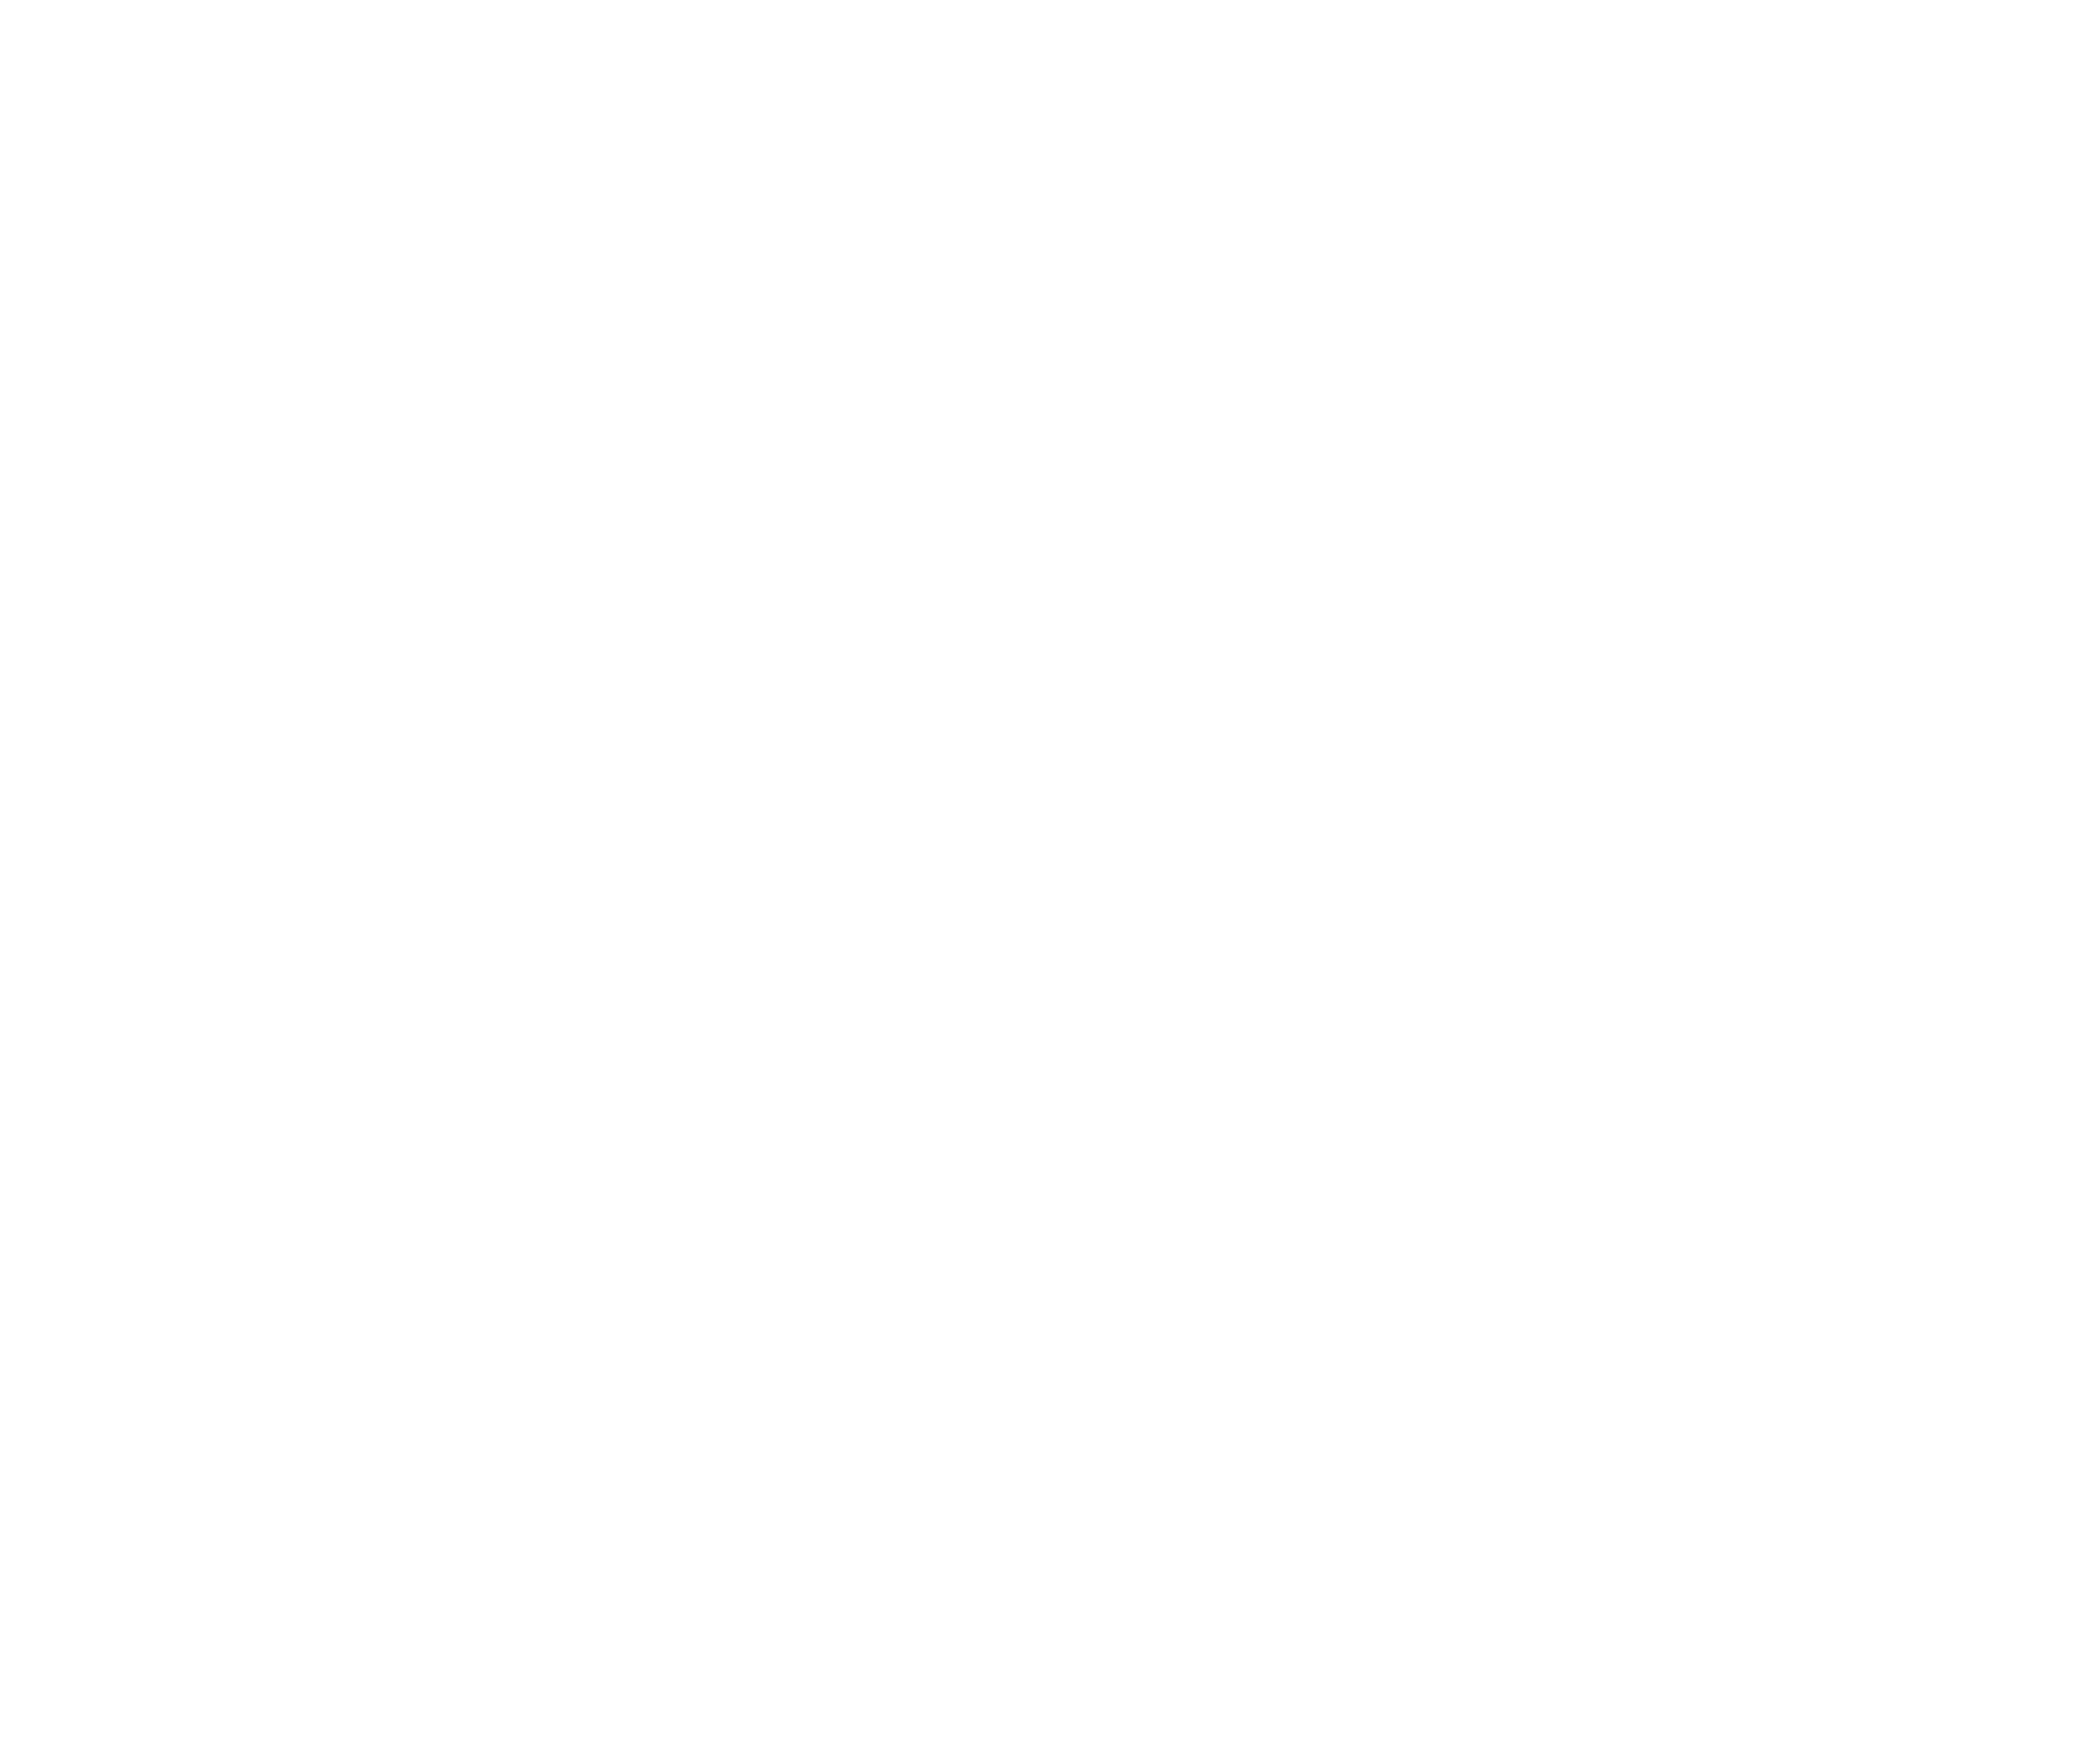 Great American Pub